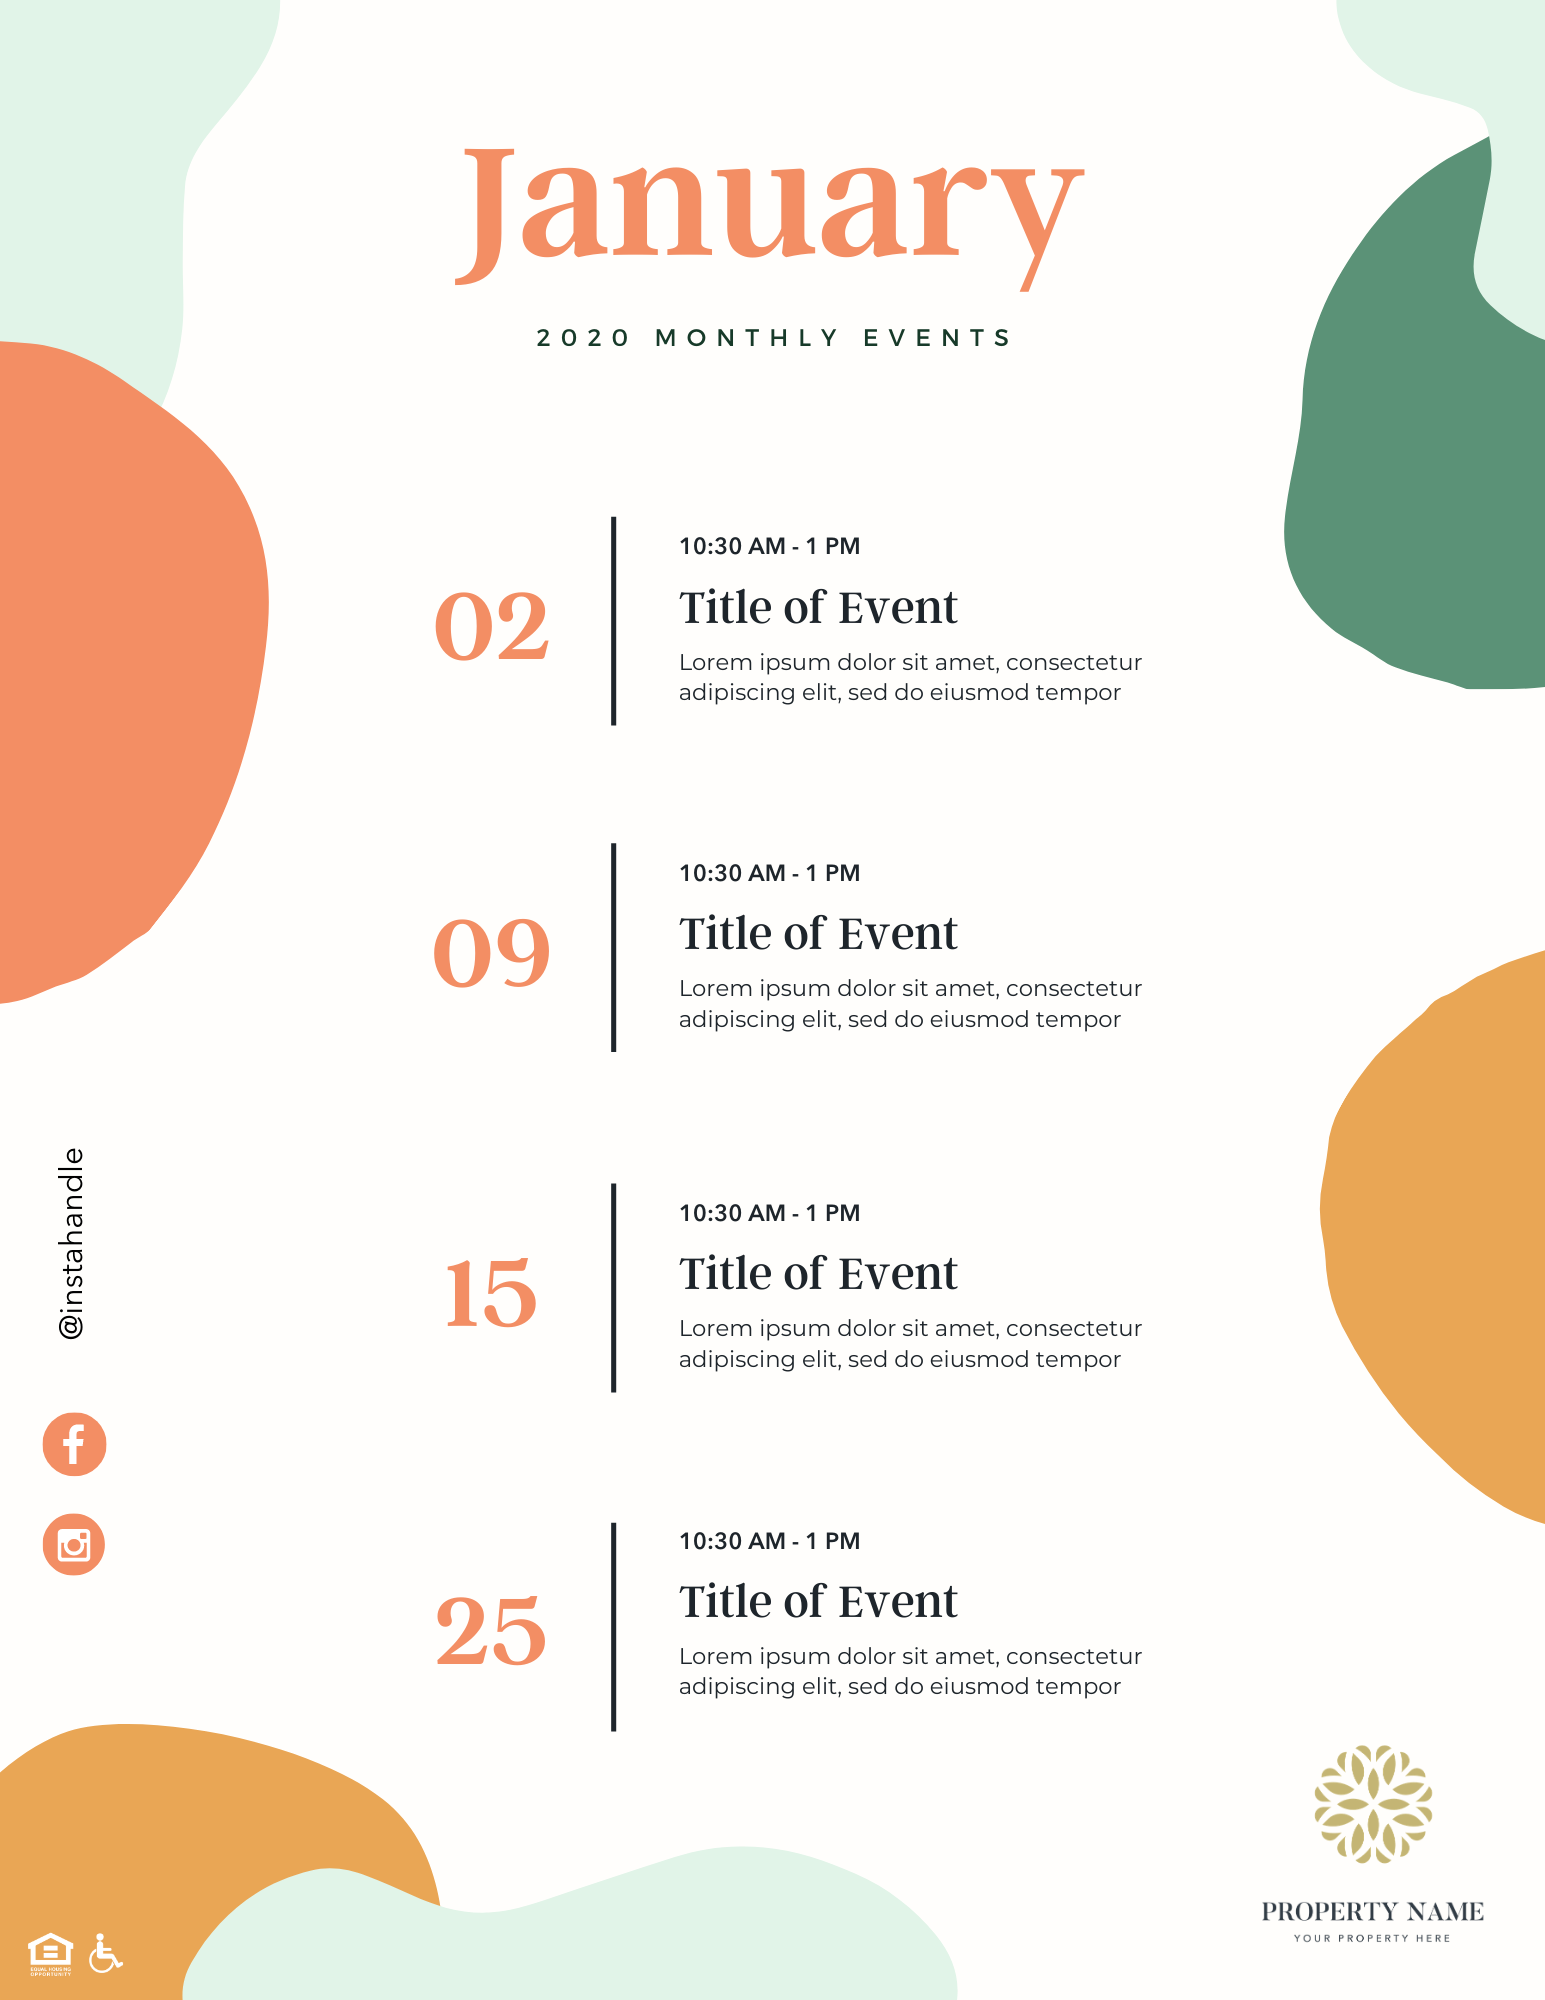 Calendar of Events (7)